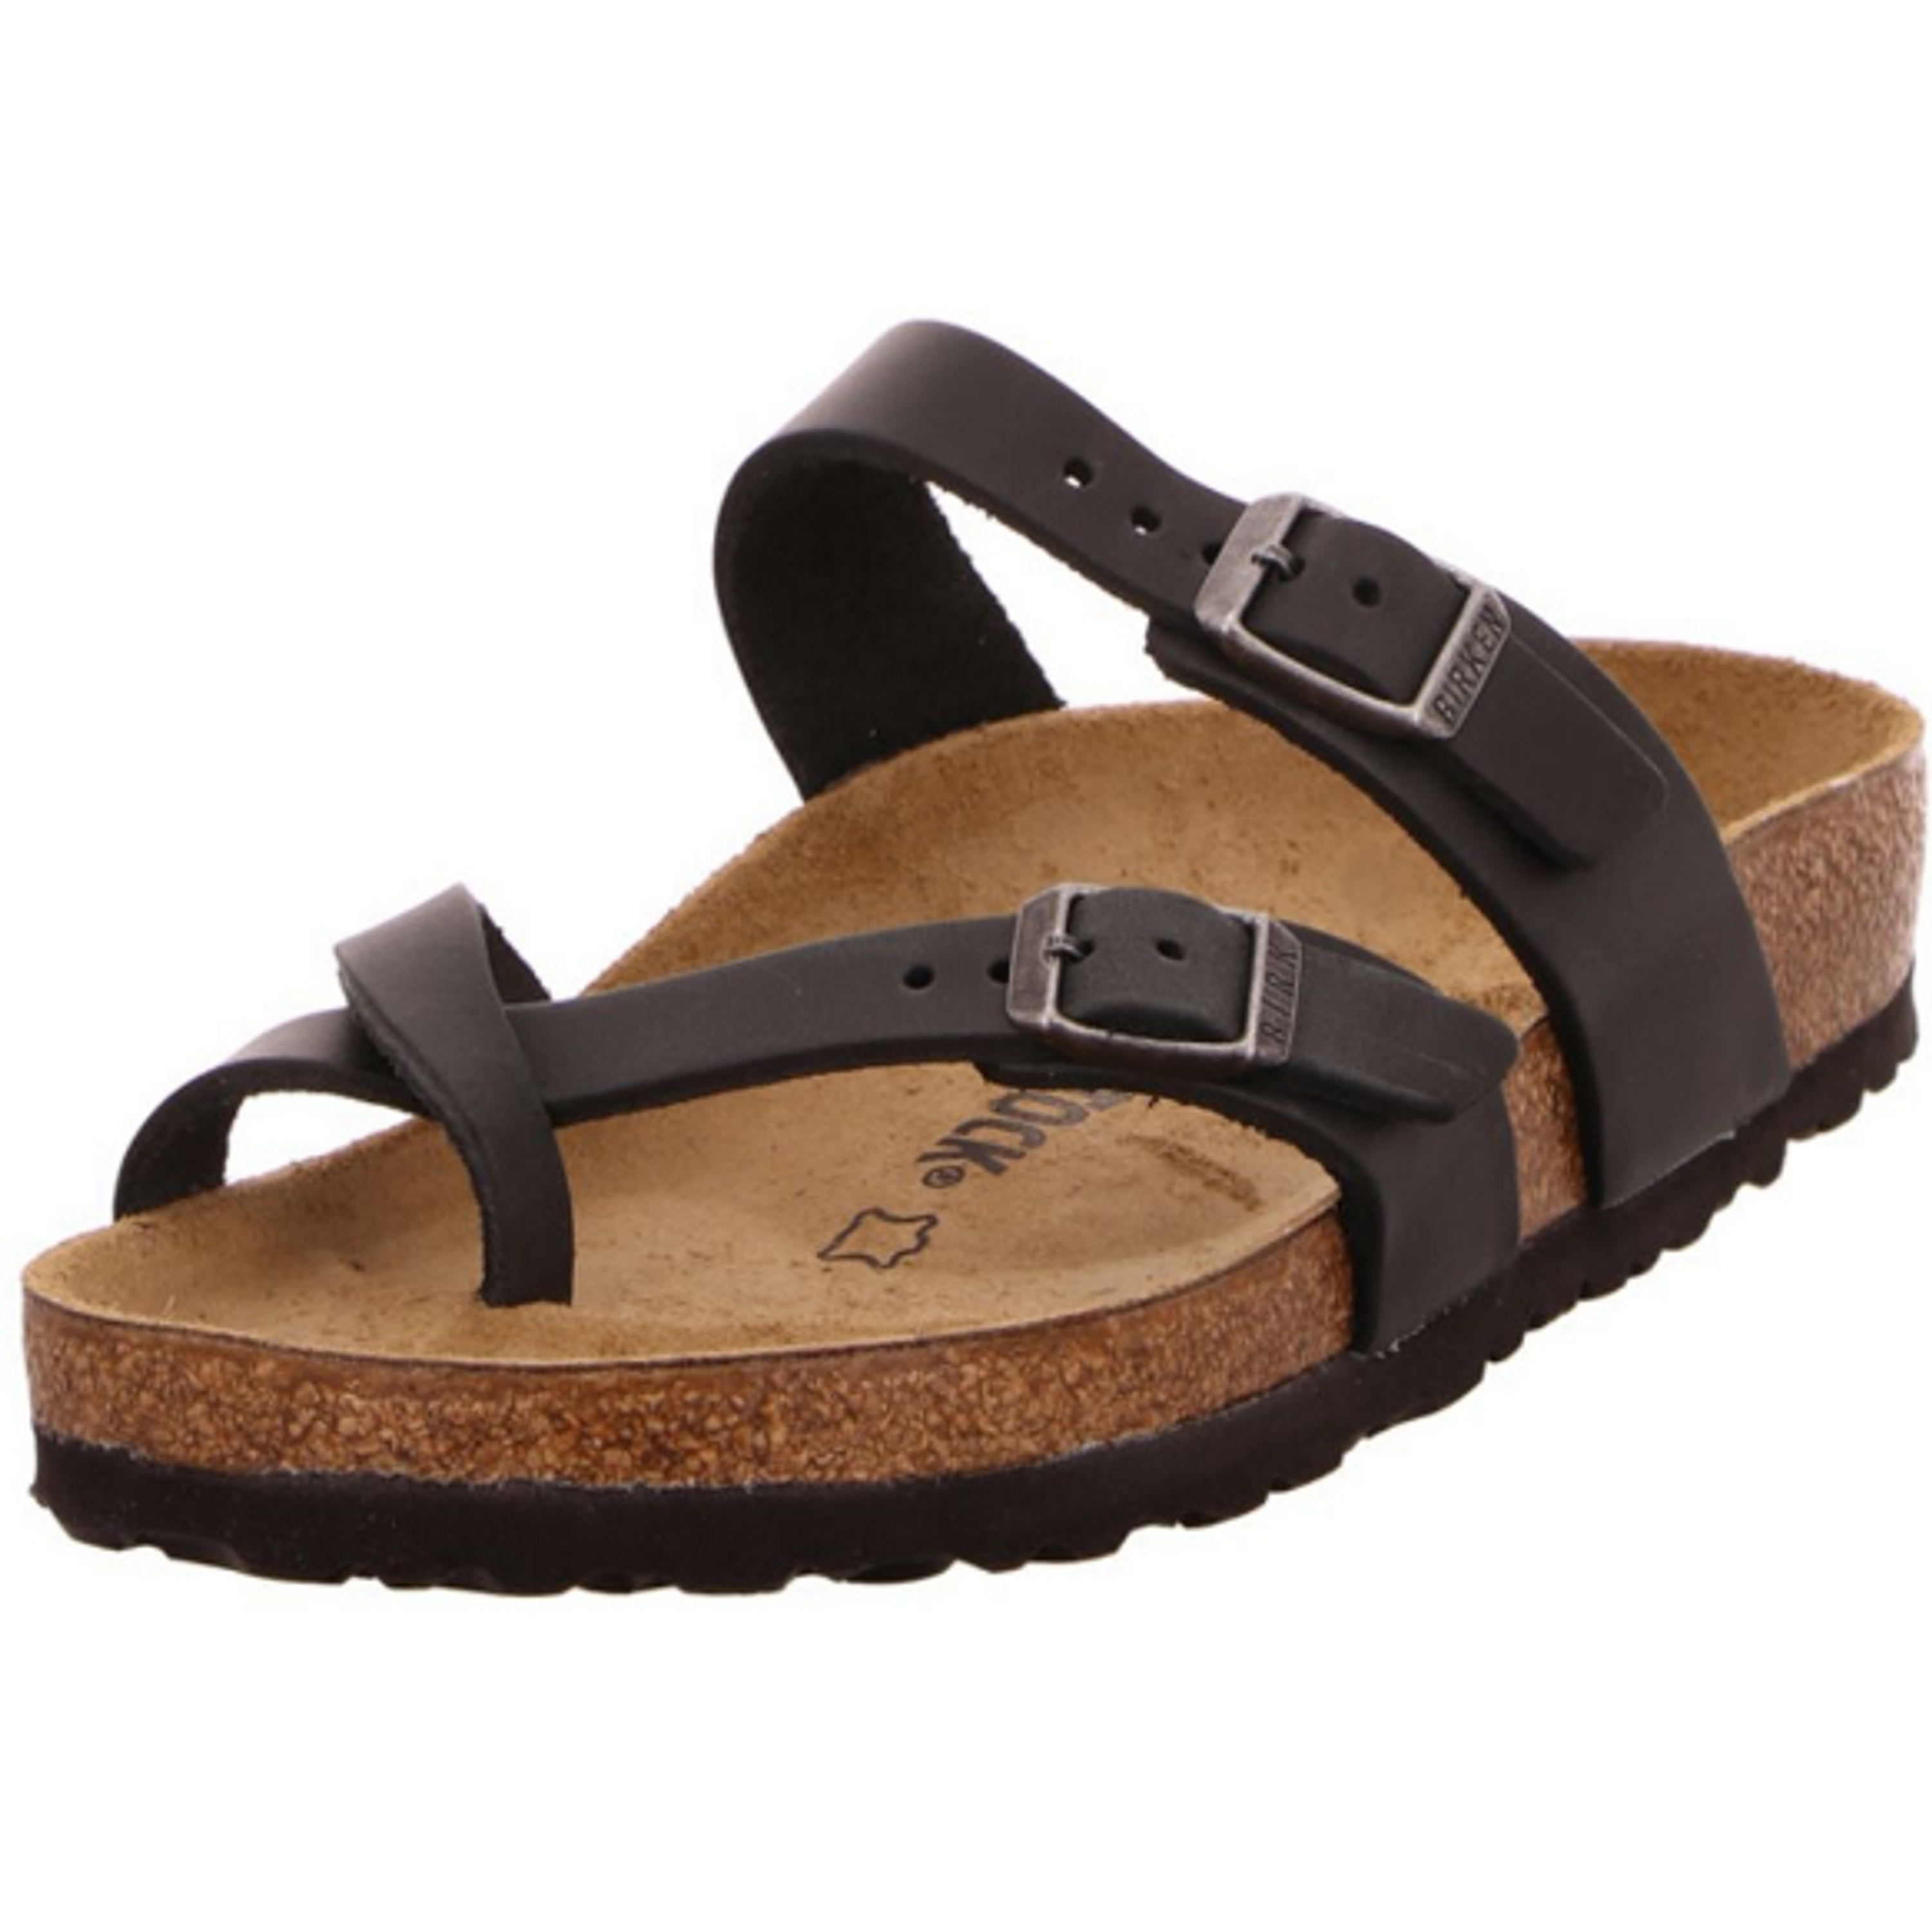 Birkenstock comfort sandals Mayari Regular black Nubuck leather - Bartel-Shop